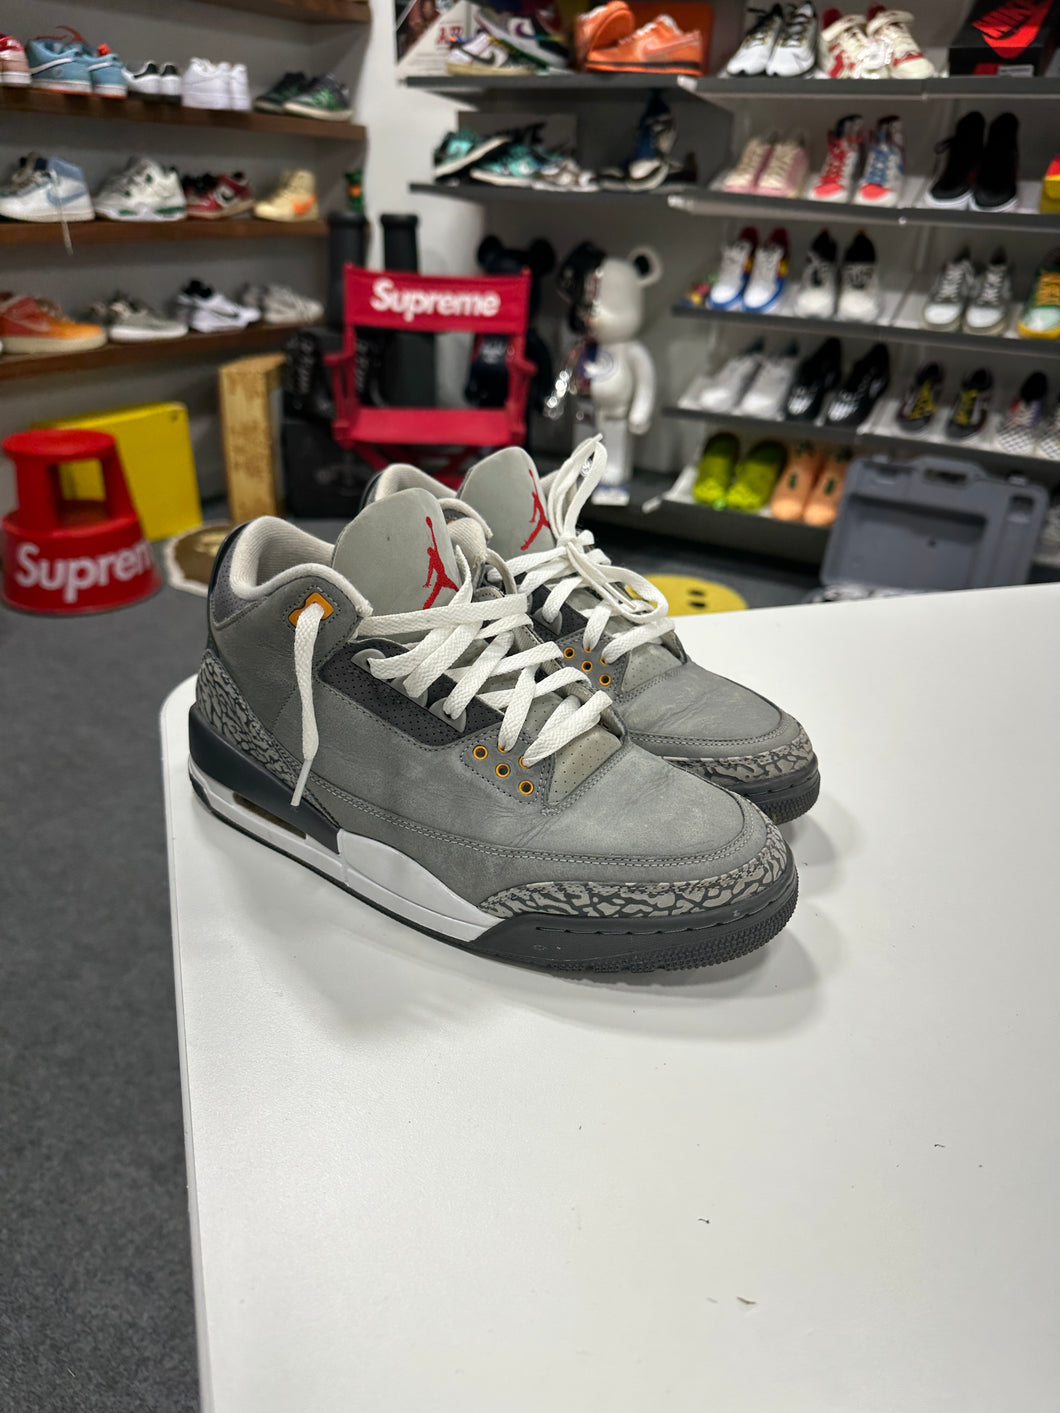 Jordan 3 Cool Grey No Box